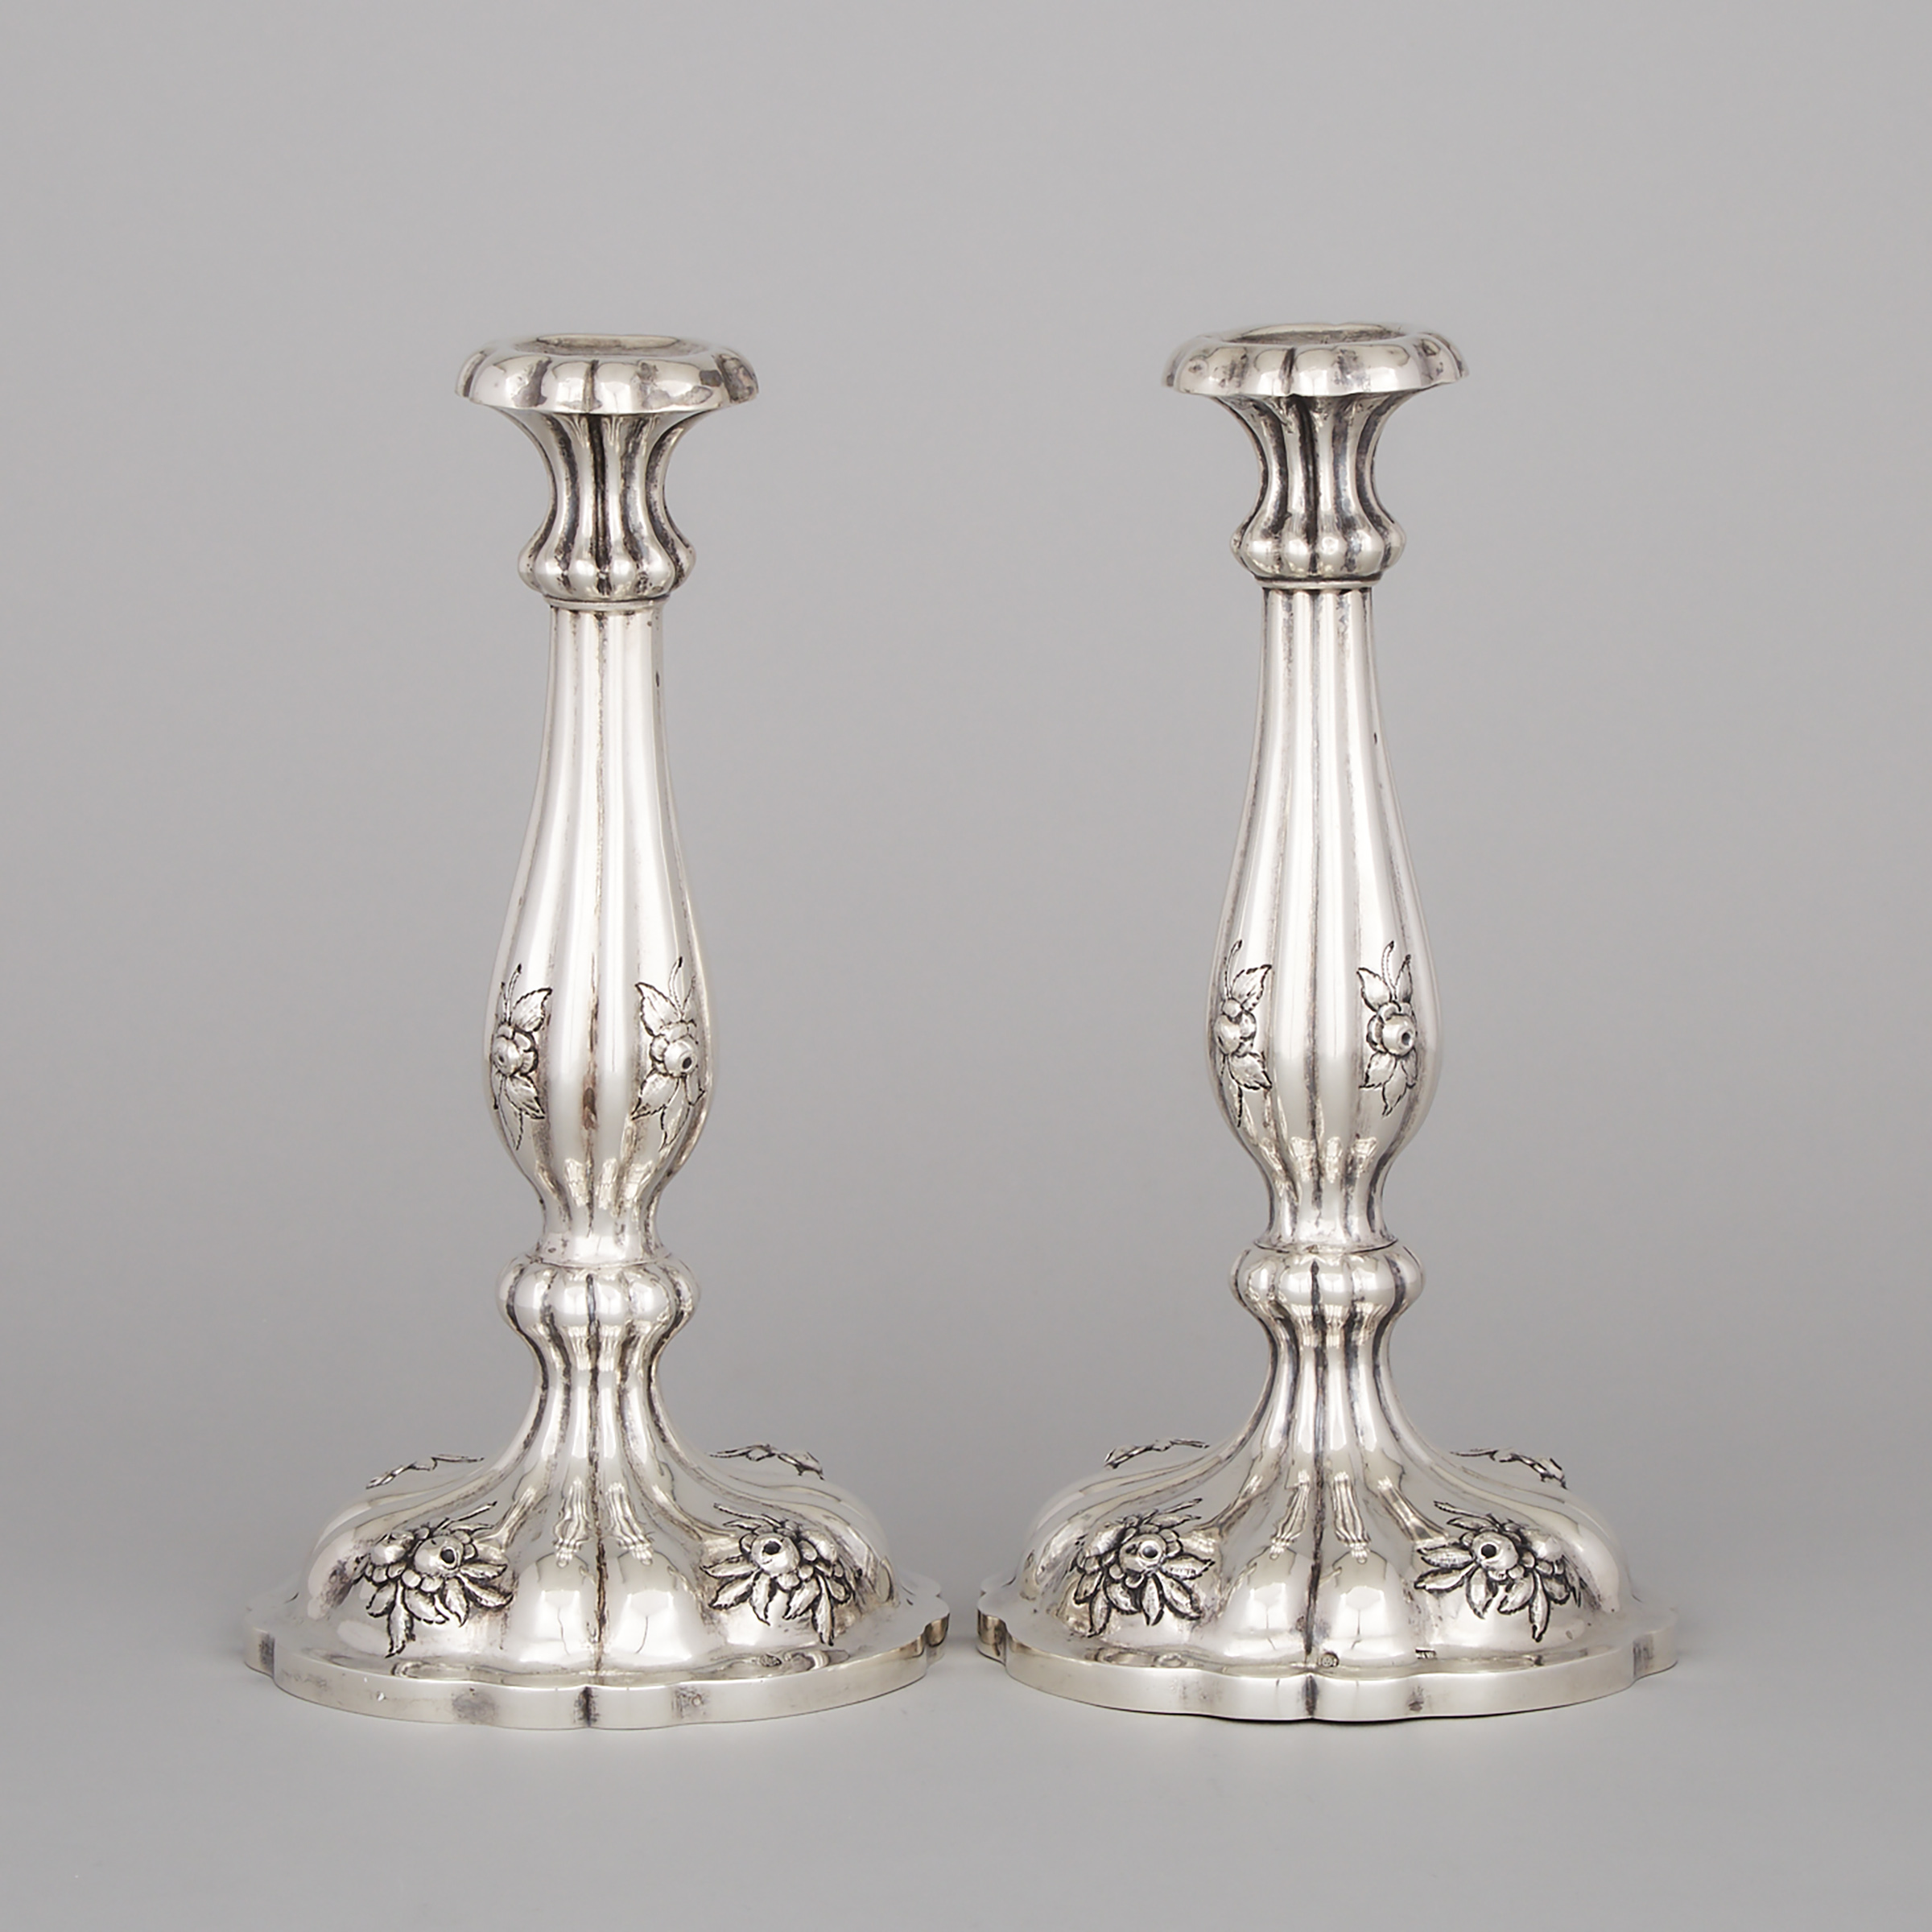 Pair of Austro-Hungarian Silver Candlesticks, Vienna, 1866